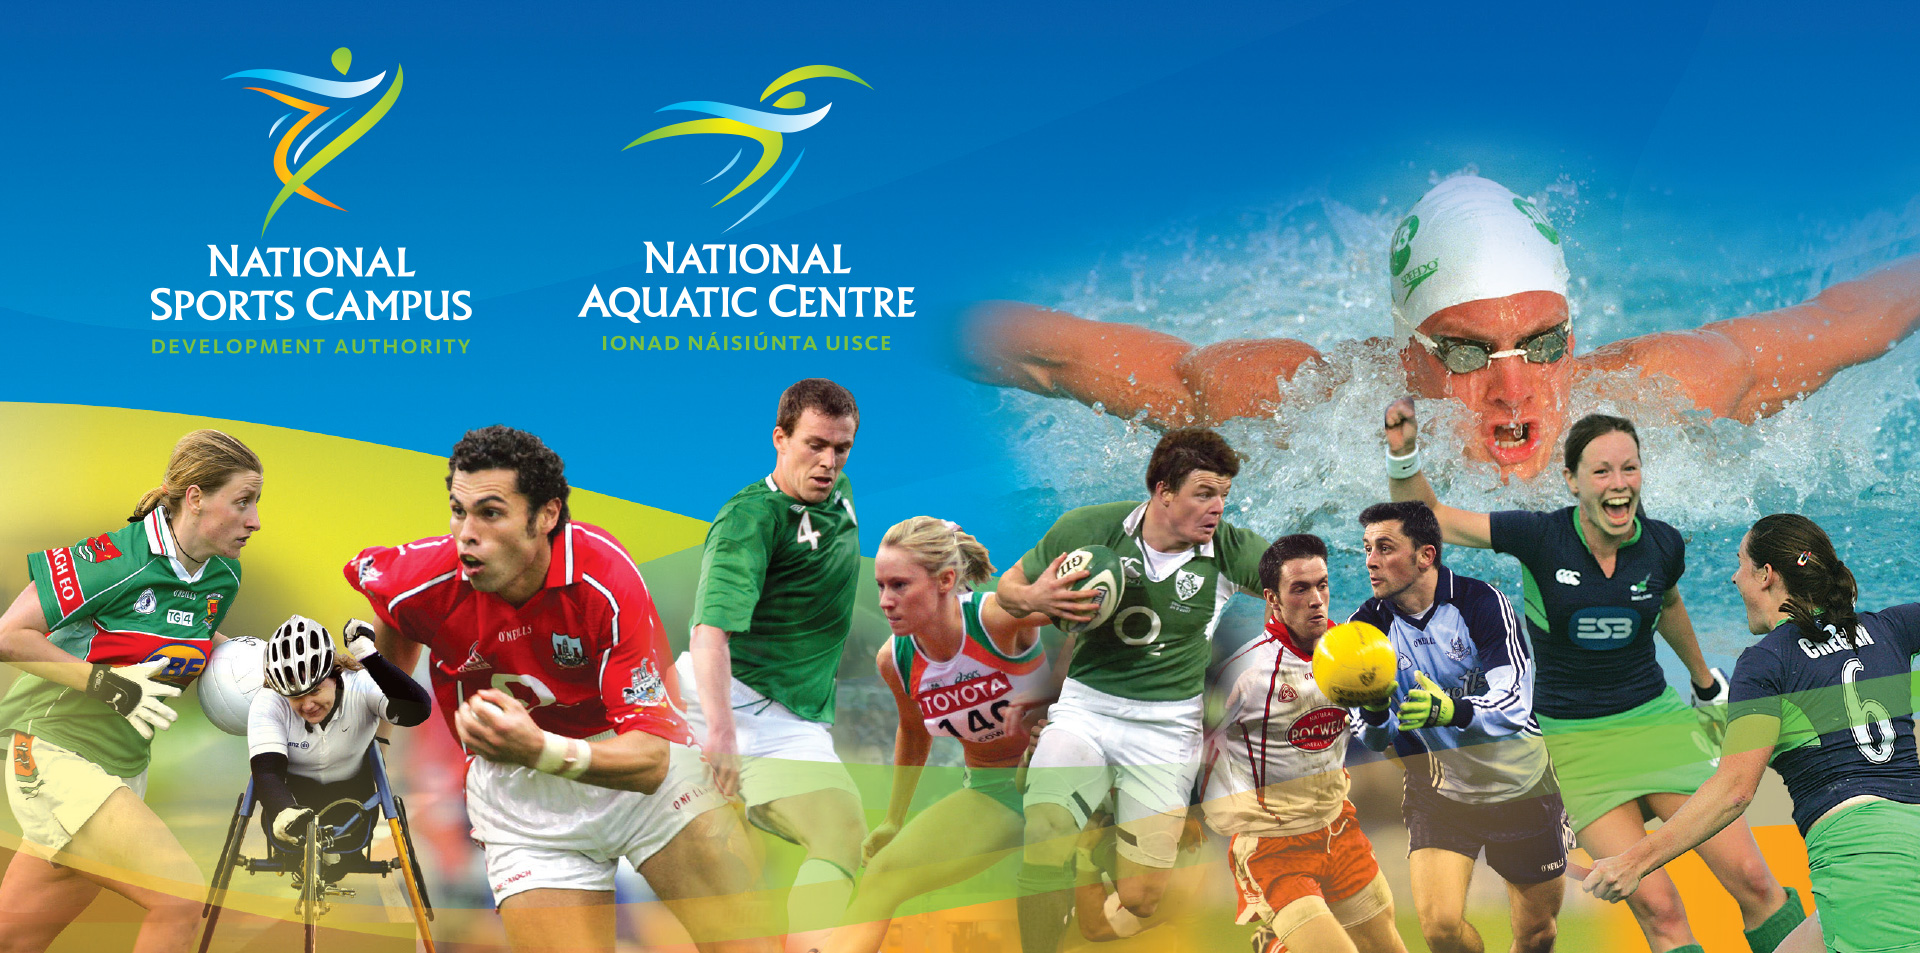 Nation Sports Campus National Aquatic Centre